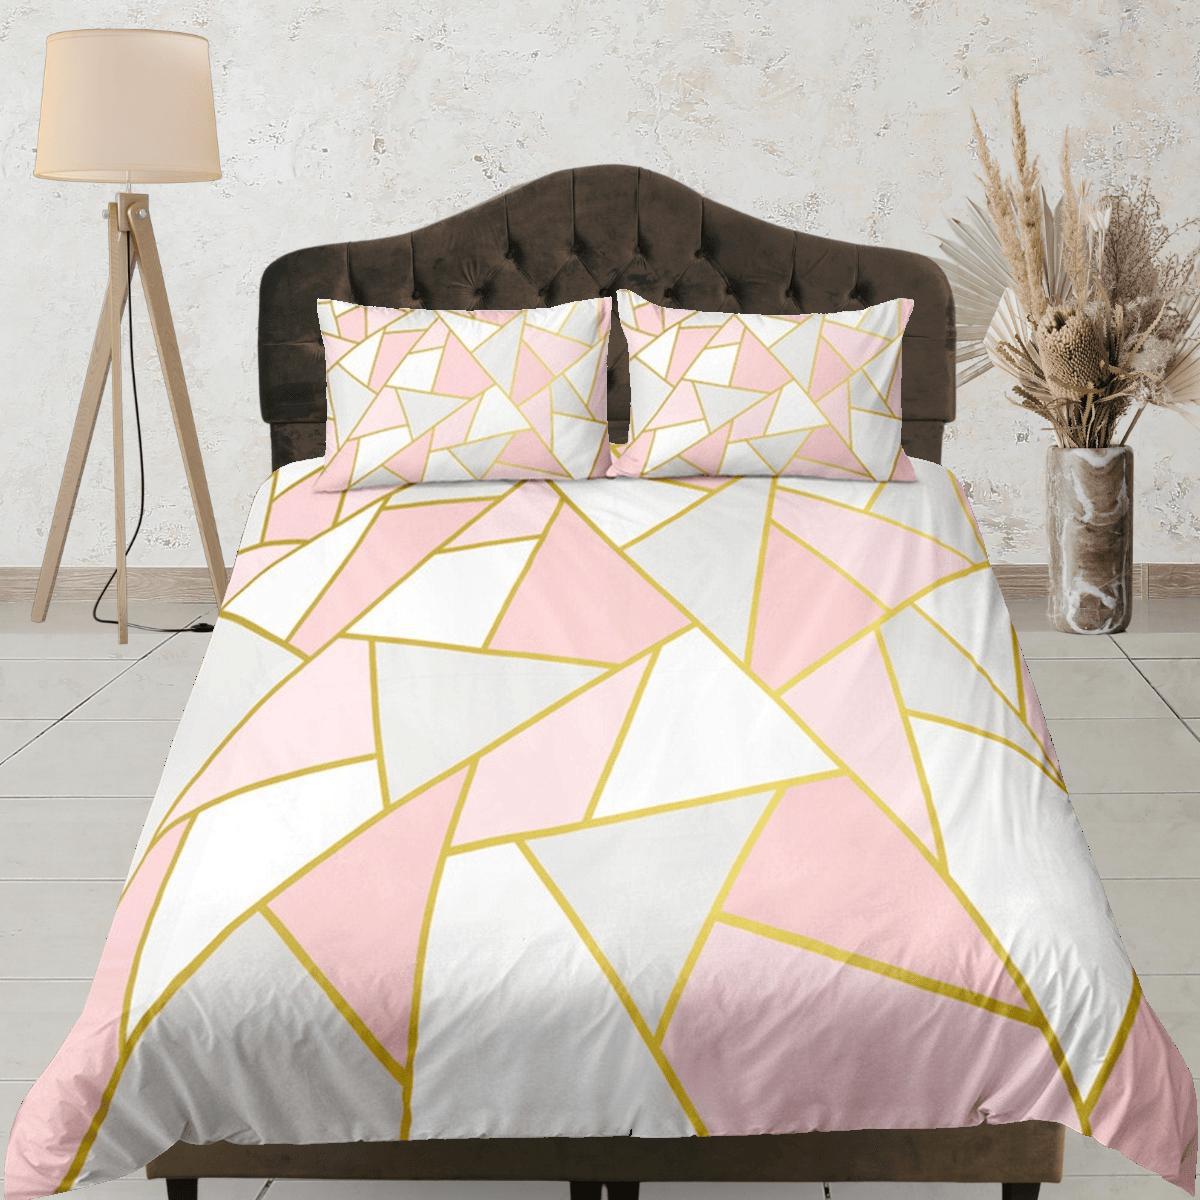 daintyduvet Girly Geometric Pink Duvet Cover Colorful Dorm Bedding Set Full Abstract Design Bedspread